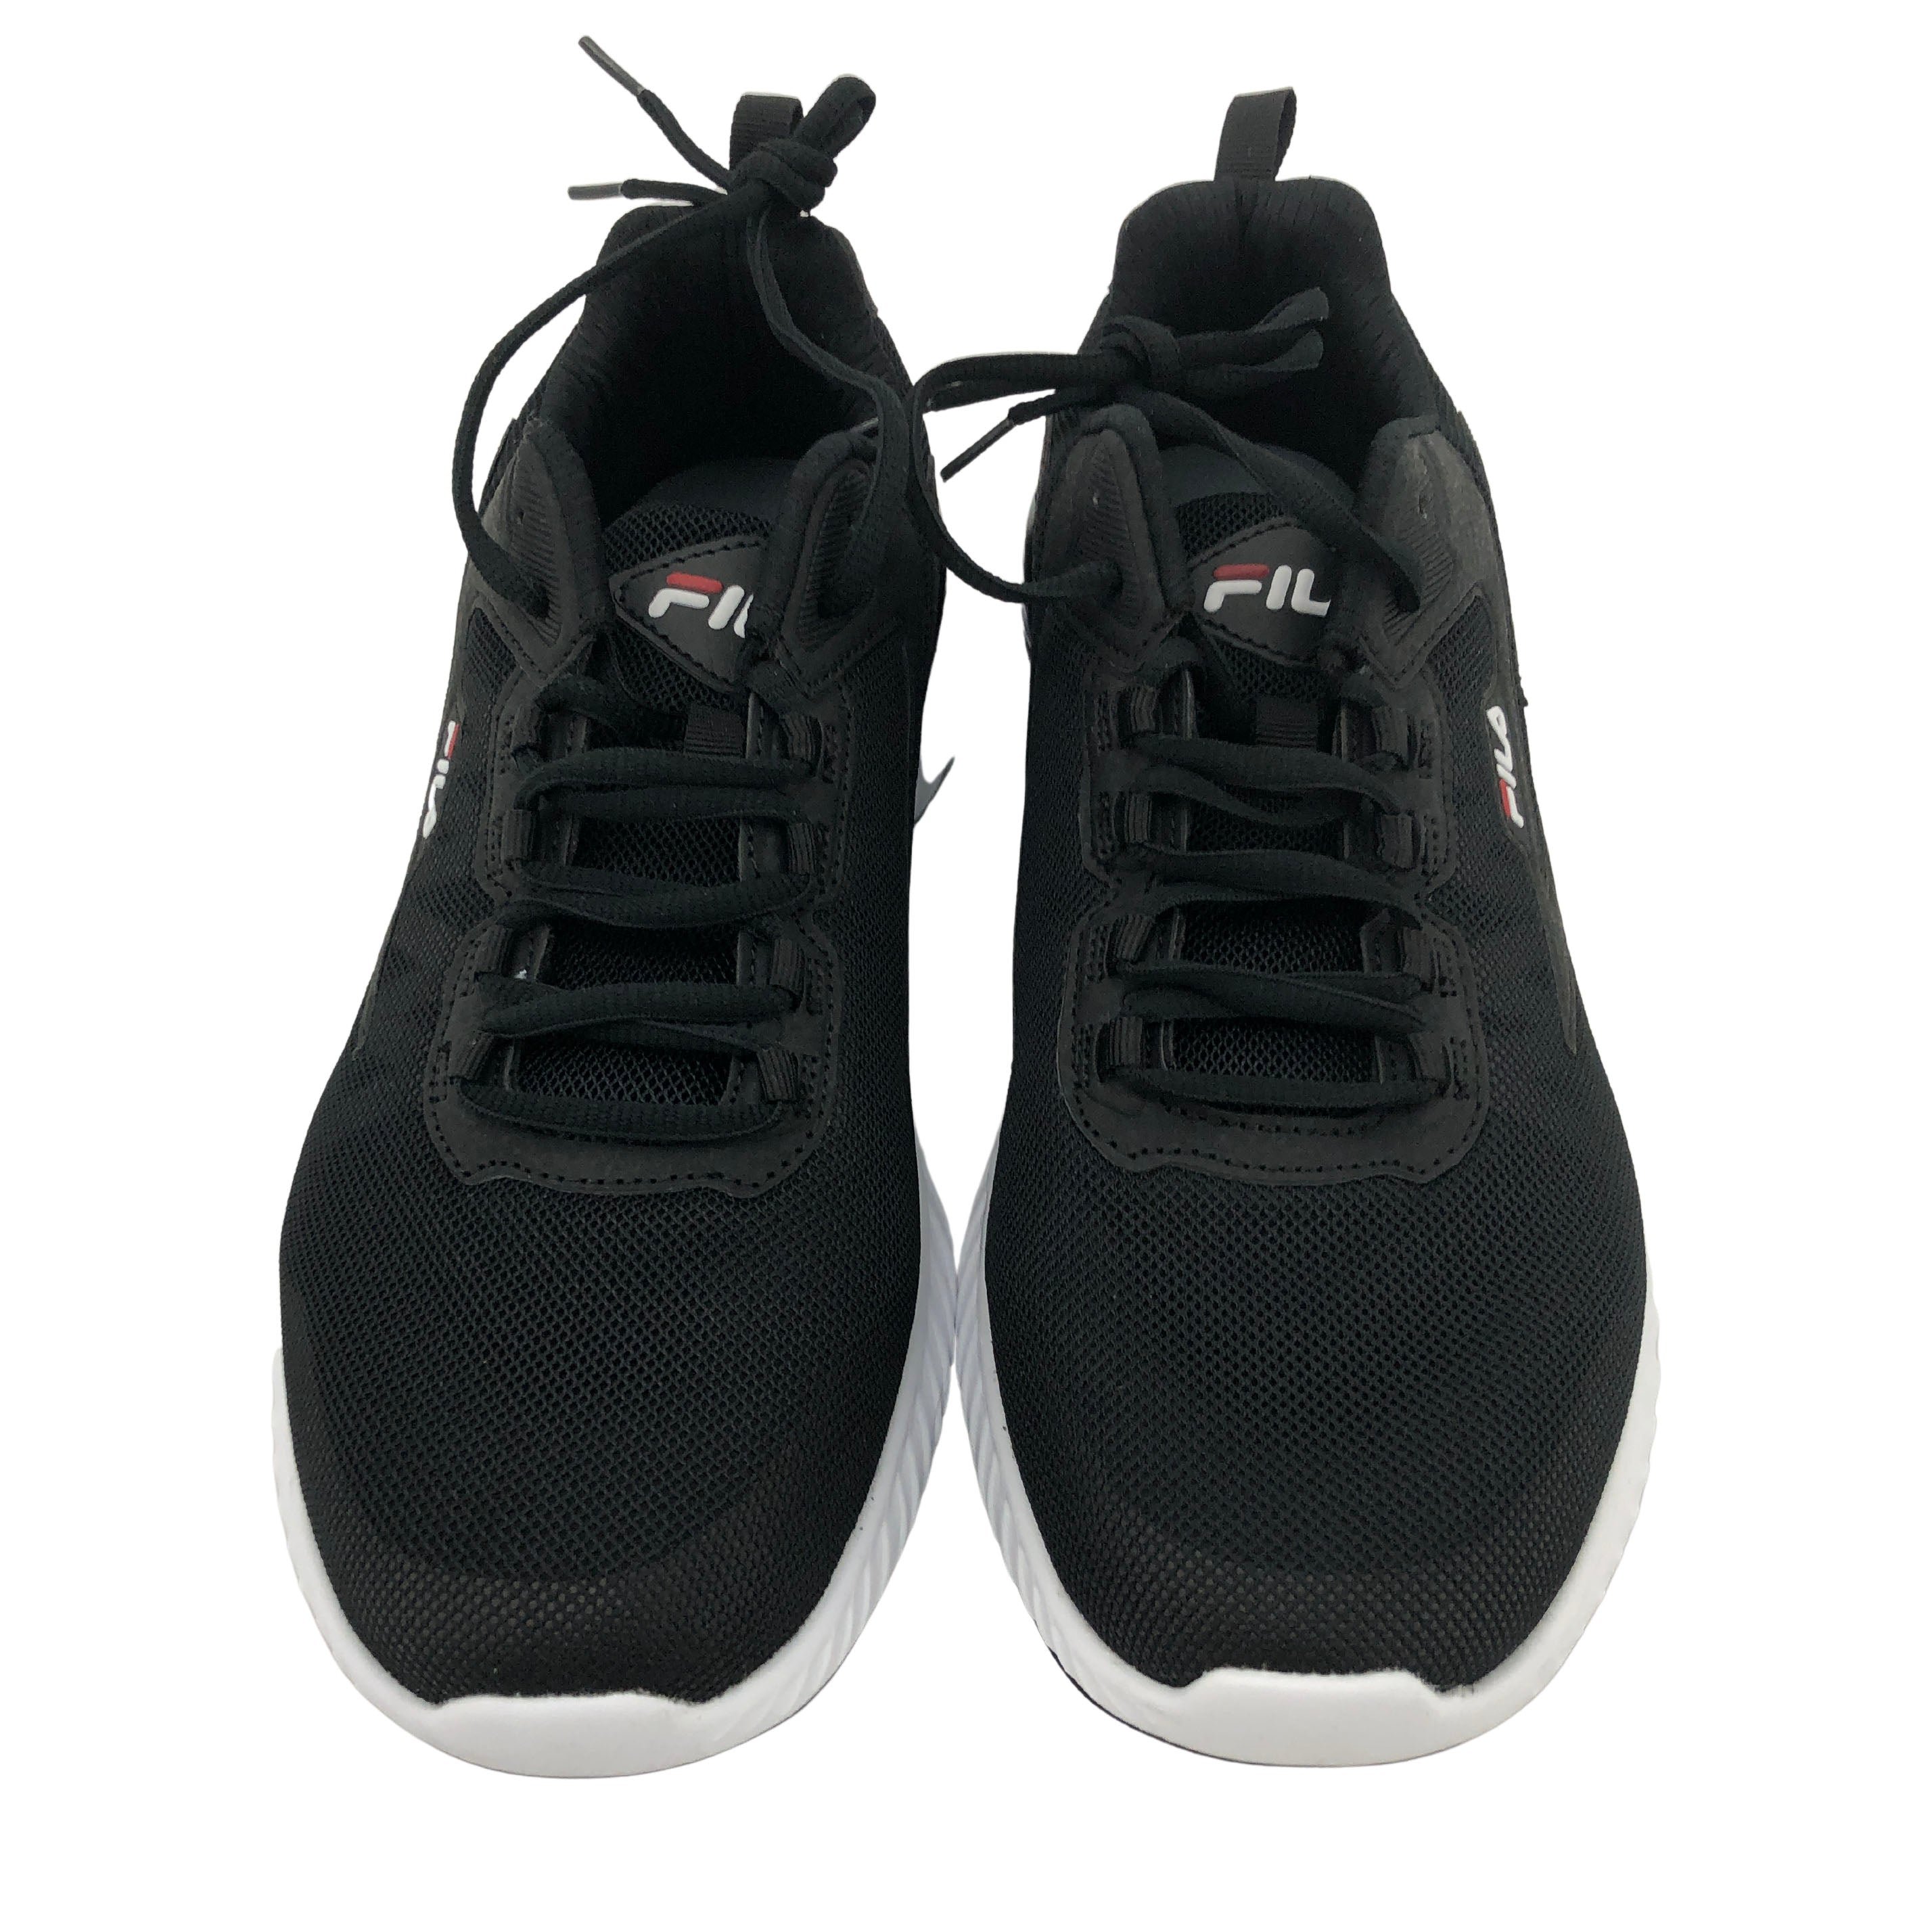 Fila Men's Running Shoes / Trazoros Energized 2 / Black / Size 8